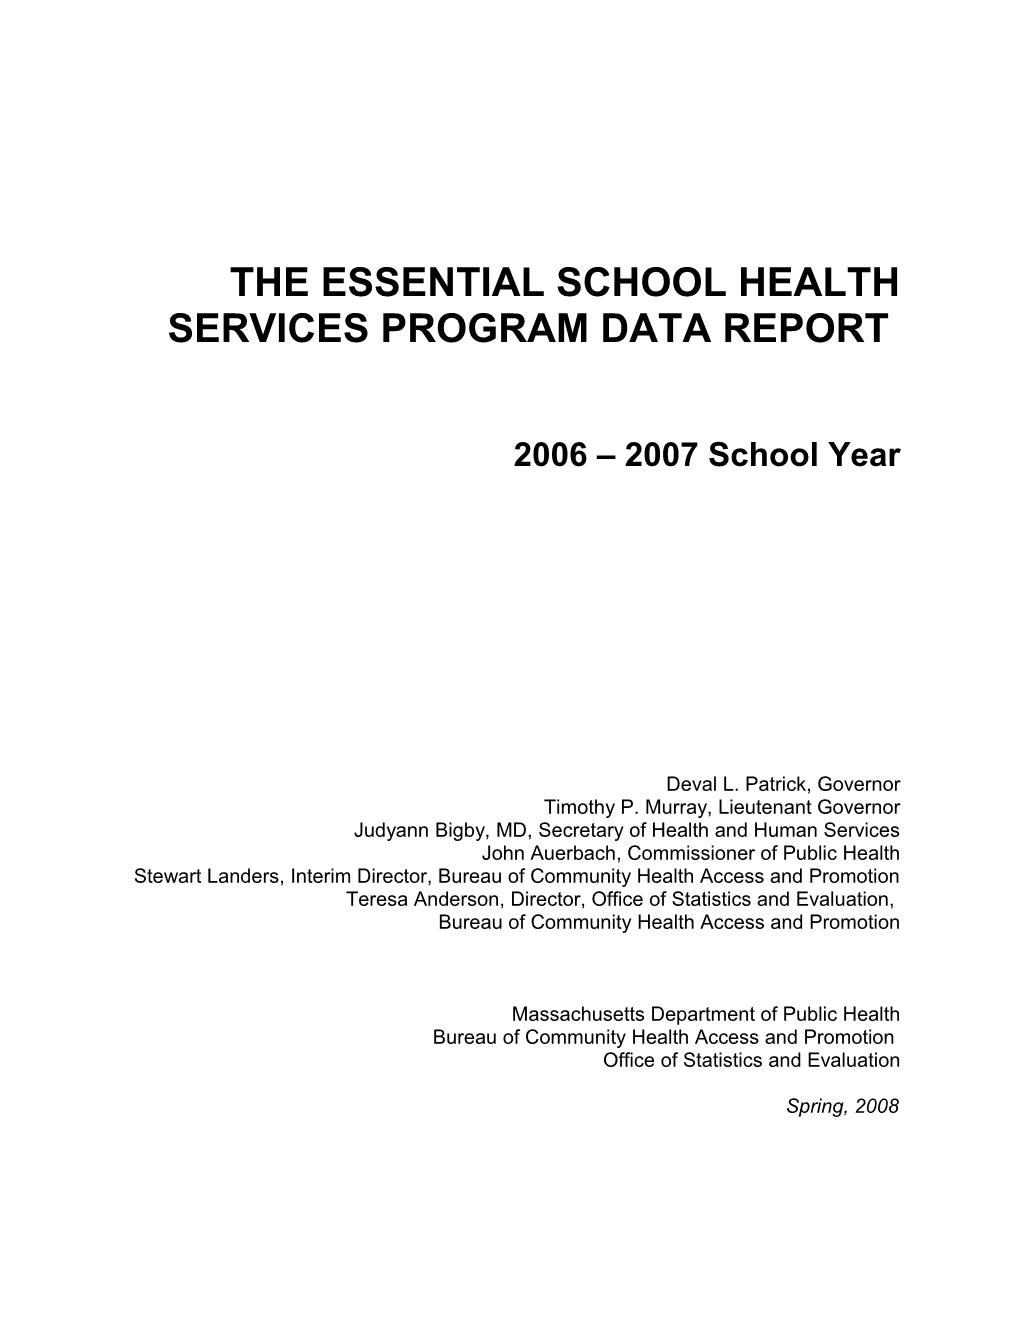 The Essentialschool Health Services Program Data Report